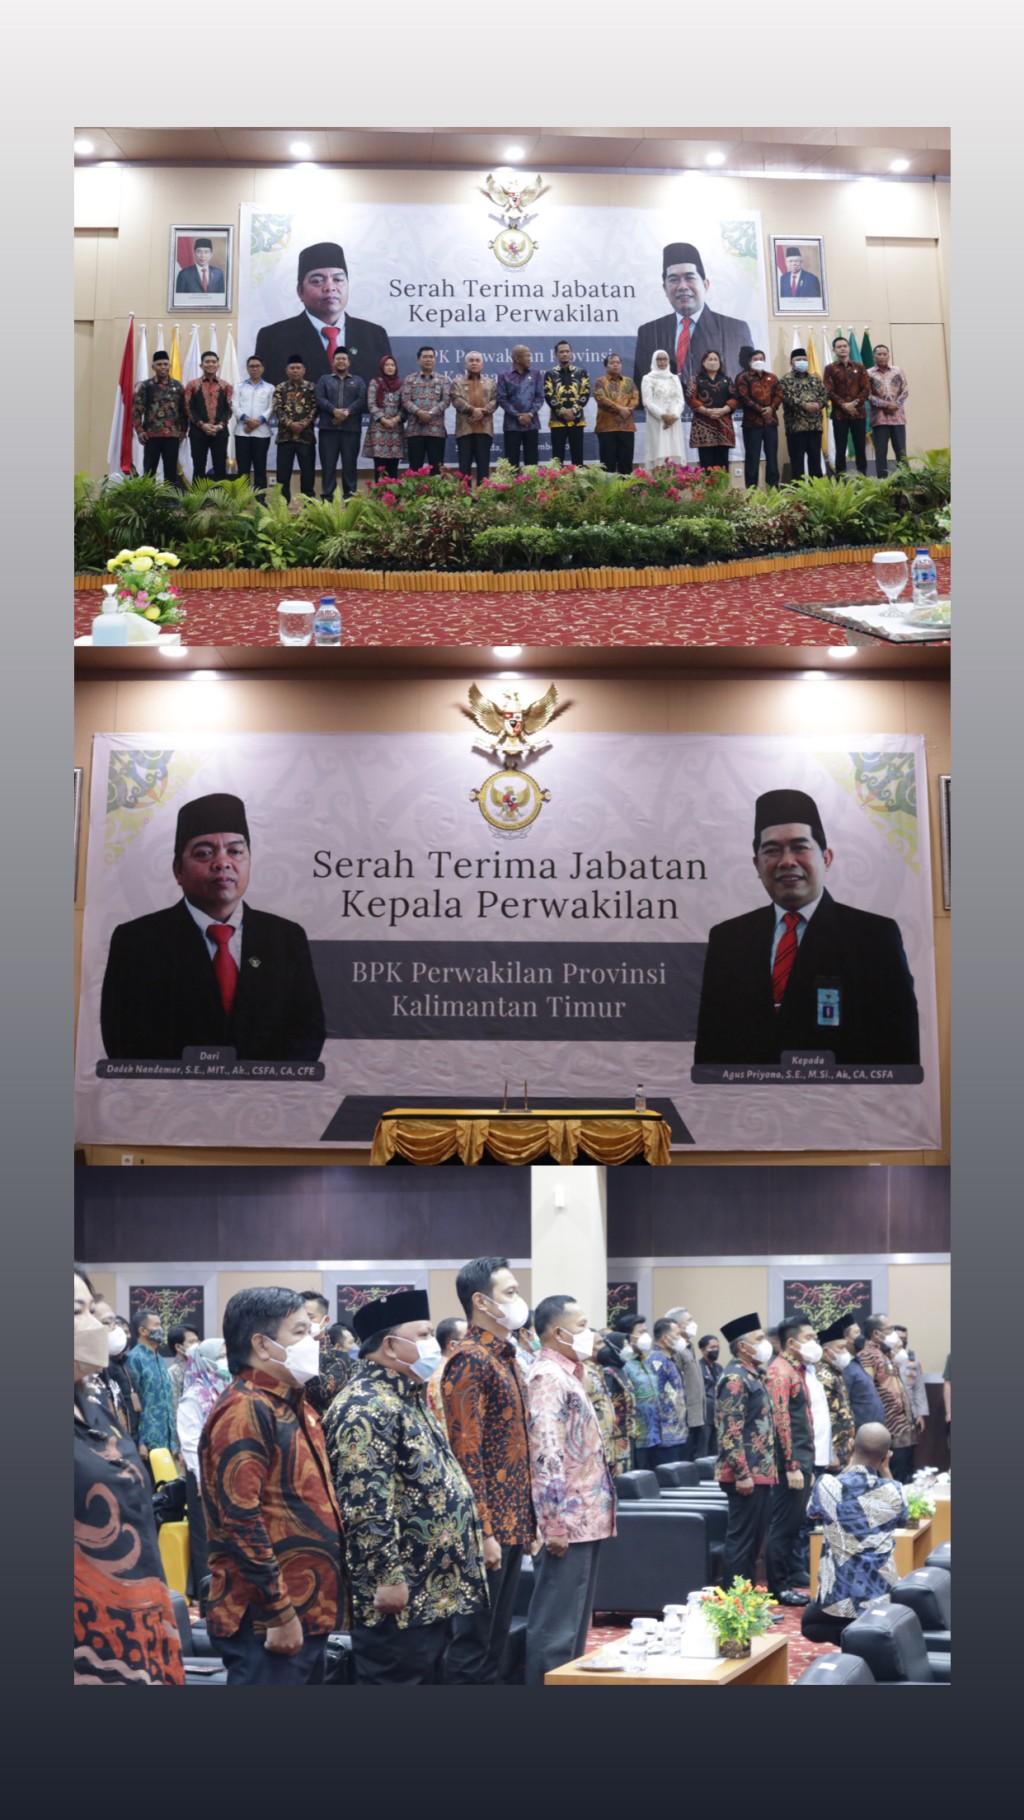 Serah Terima Jabatan Kepala Badan Pemeriksa Keuangan Republik Indonesia Perwakilan Provinsi Kalimantan Timur